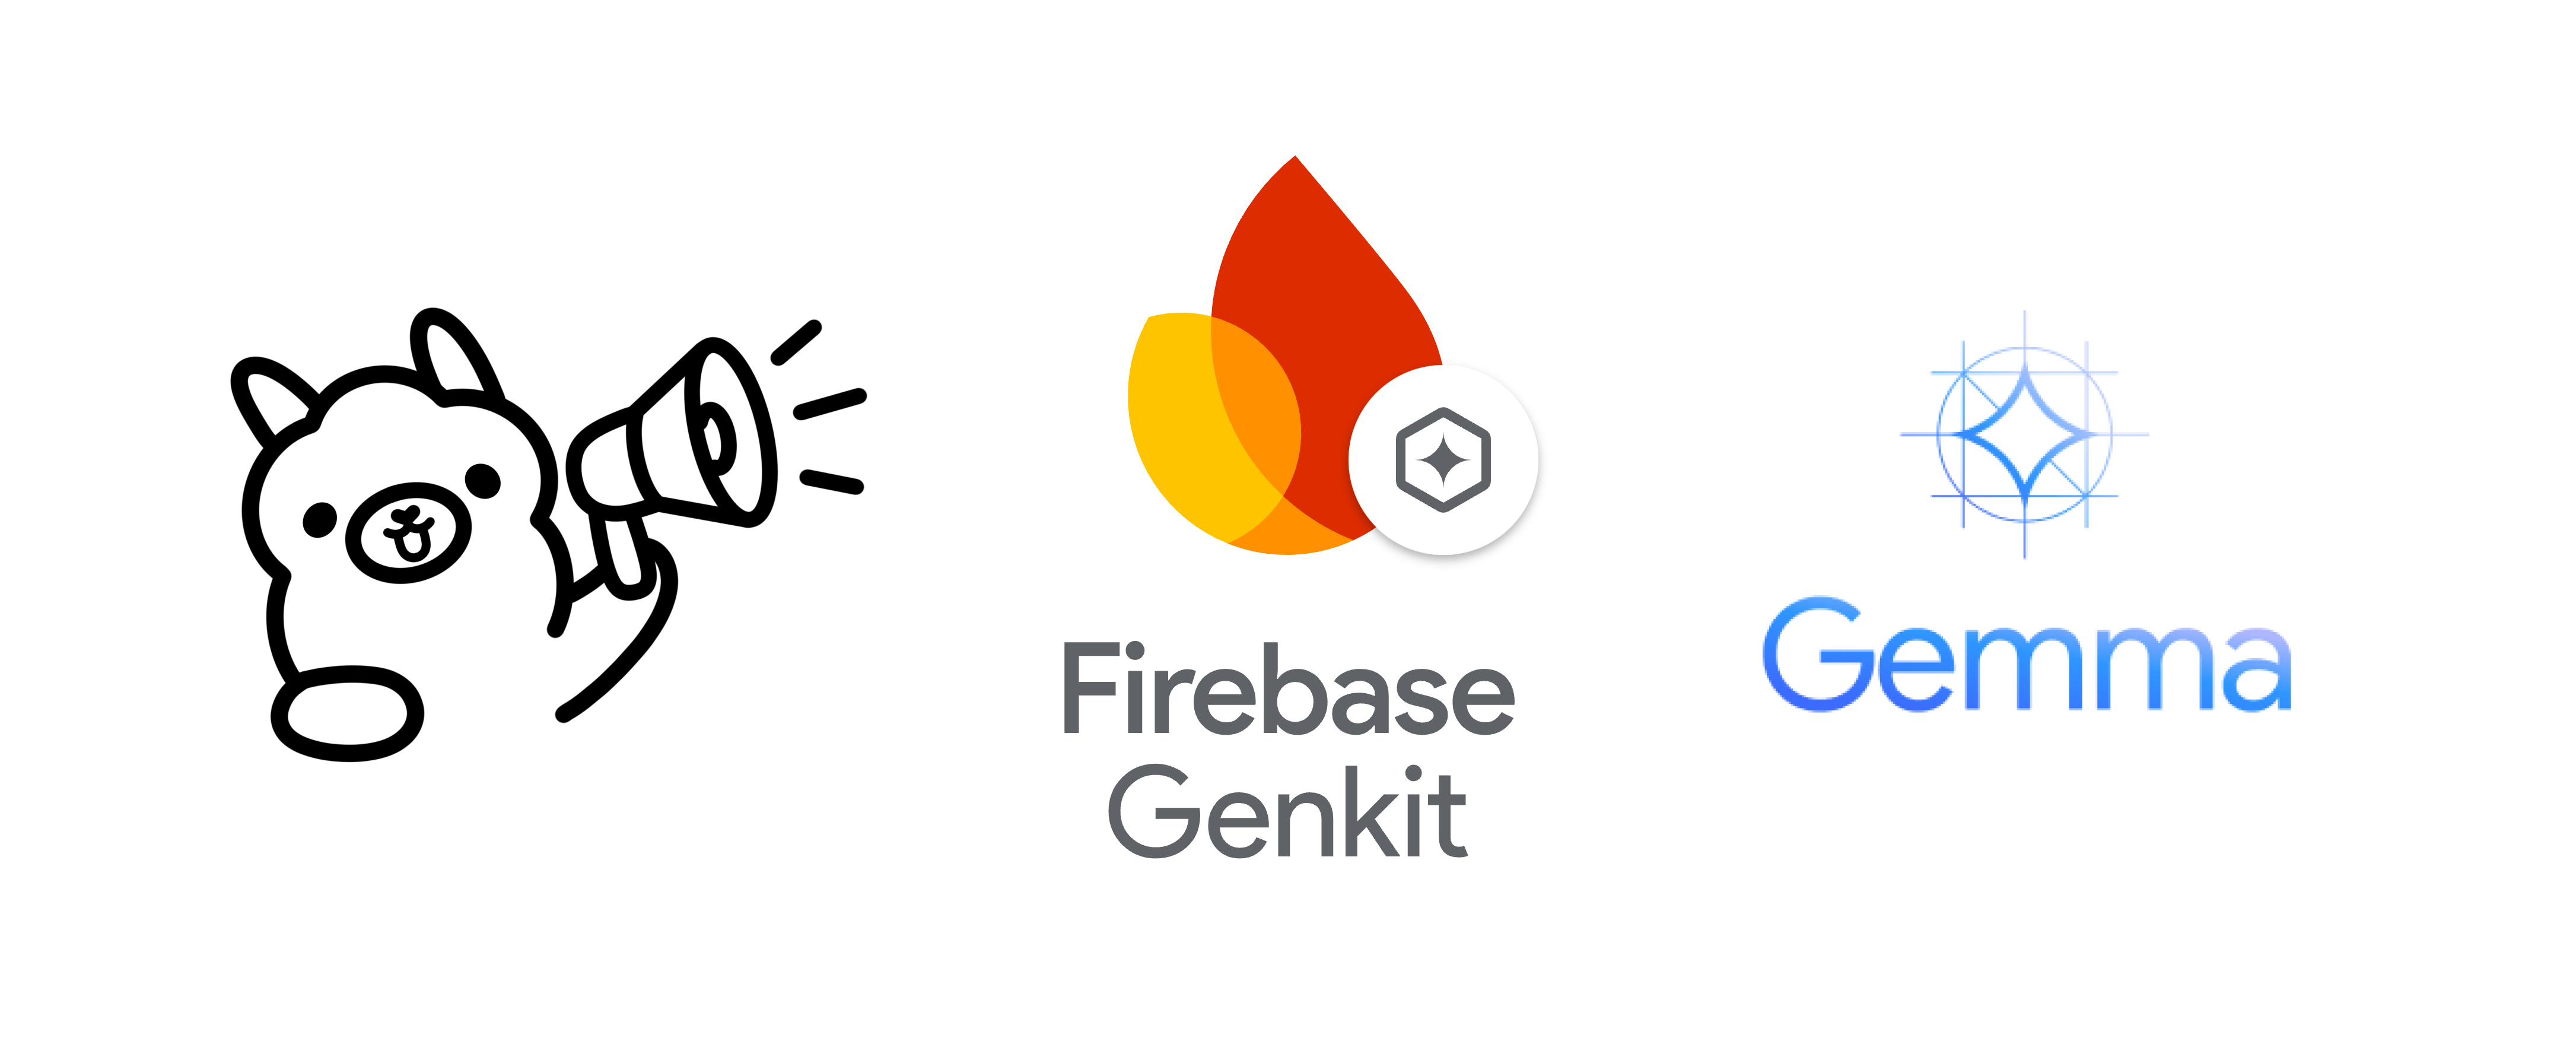 Ollama Firebase Genkit